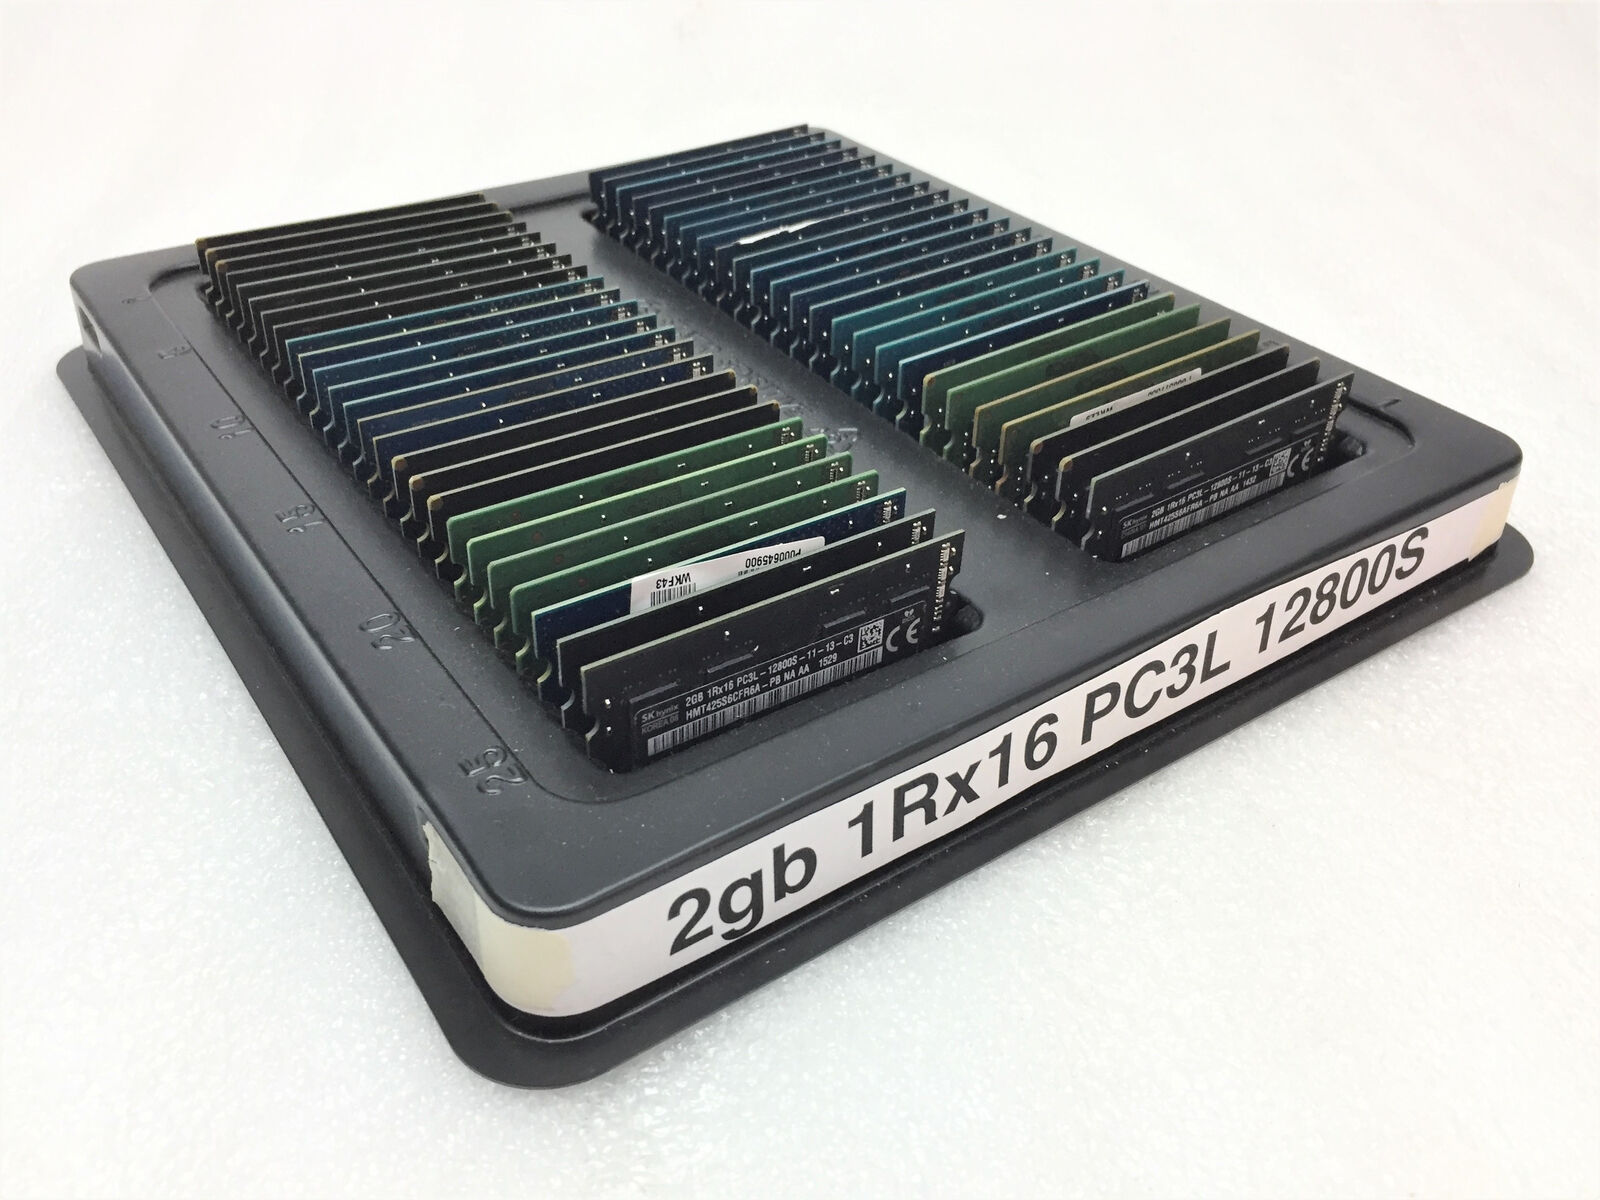 Lot of 50 RAM SO-DIMM Laptop Memory Mixed Brand 2GB 1Rx16 PC3L-12800S non-ECC